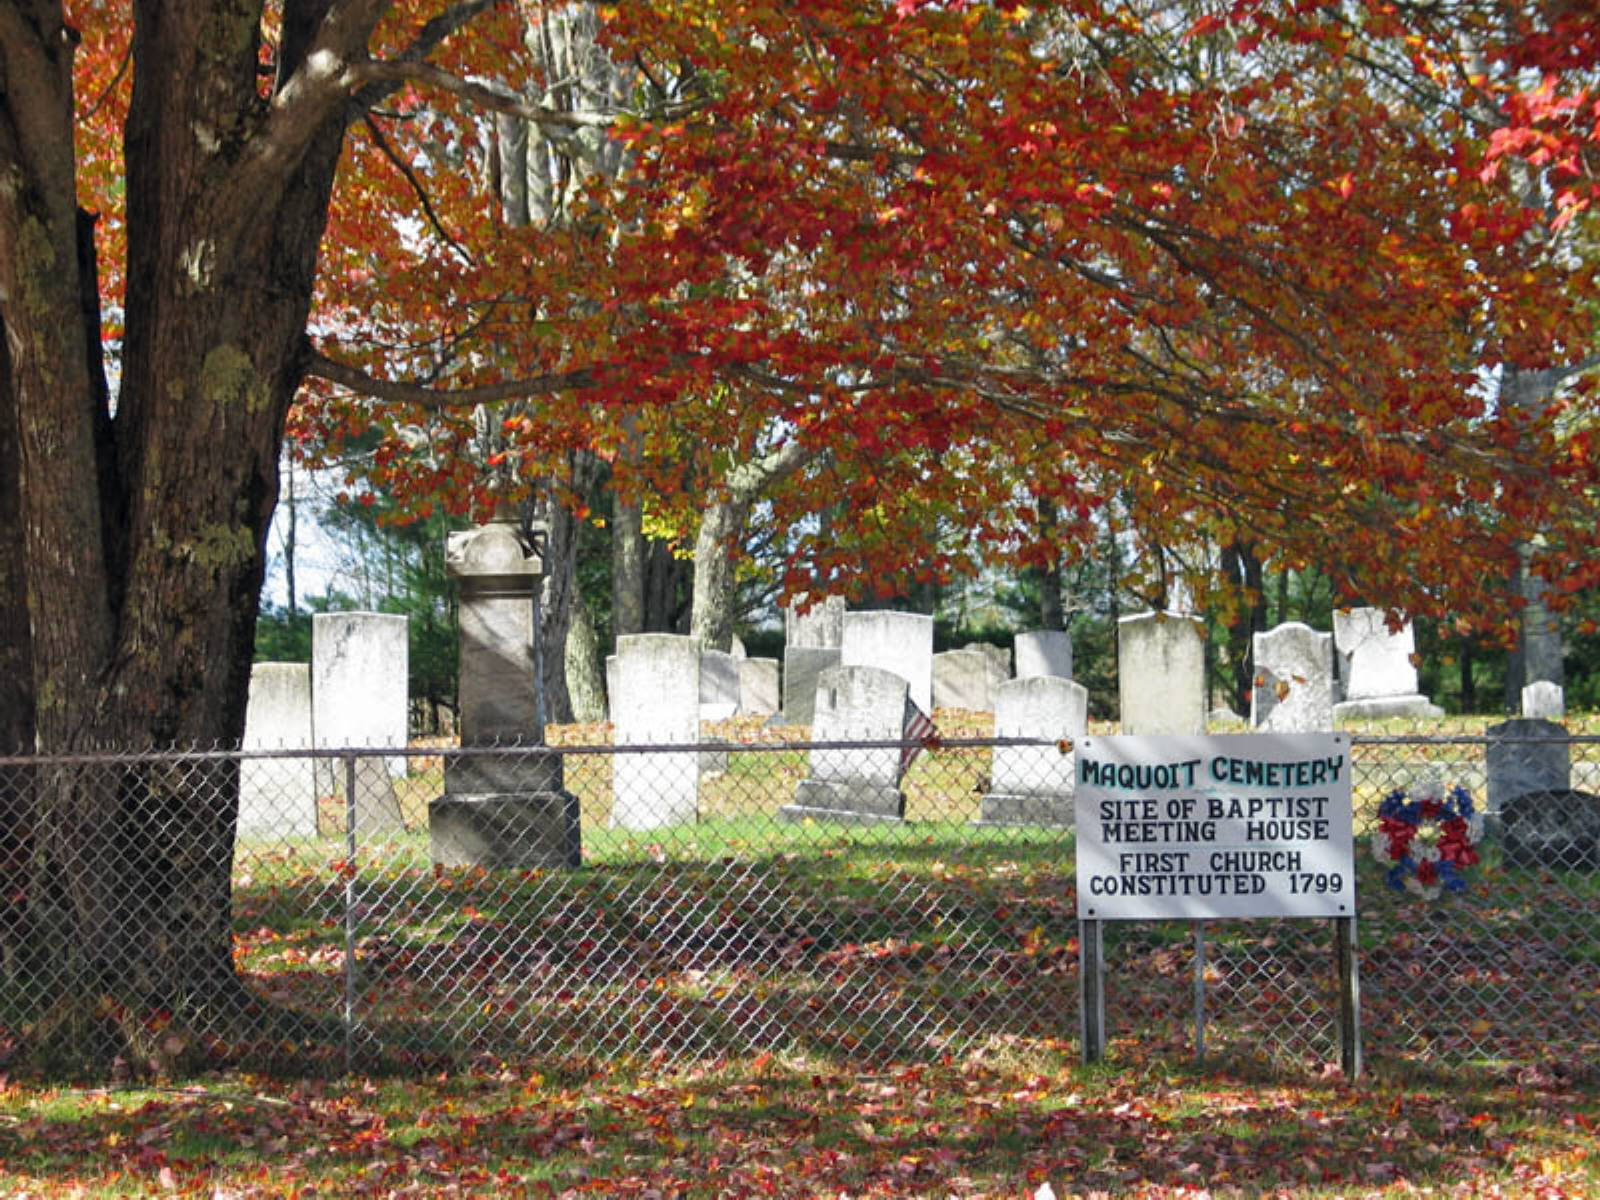 Maquoit Cemetery